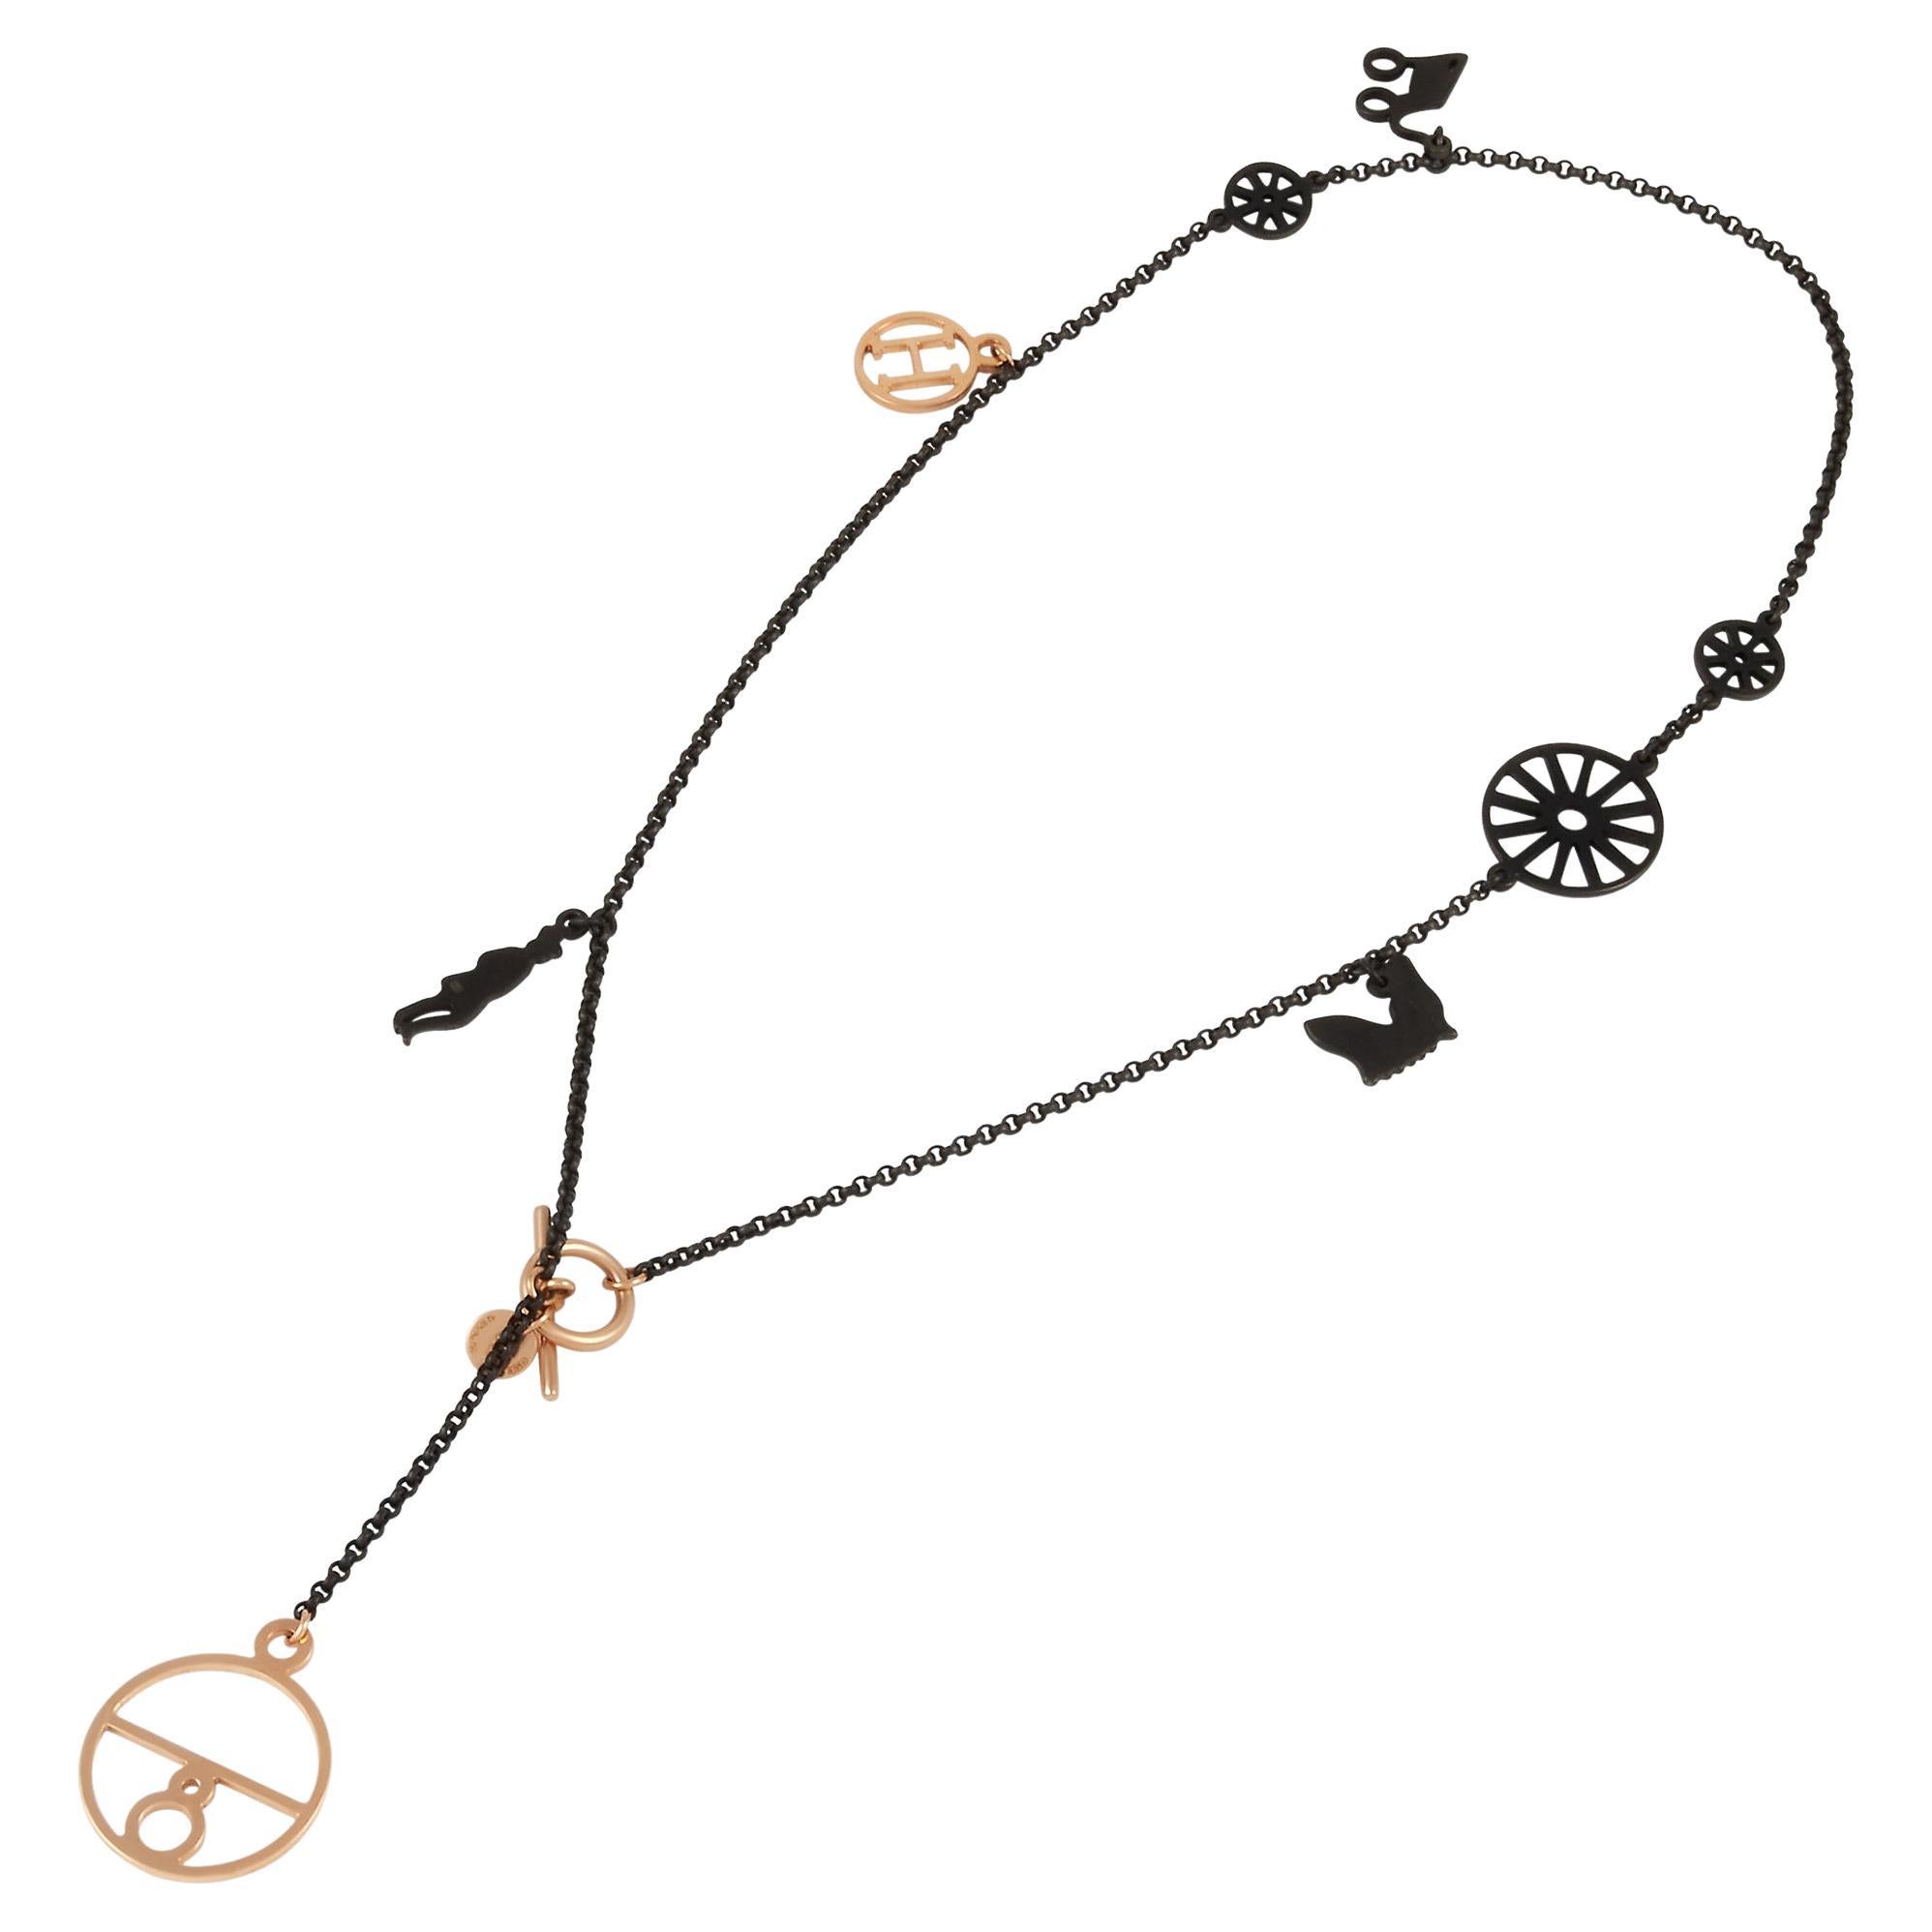 Hermès 18K Rose and Black Gold Toggle Charm Necklace